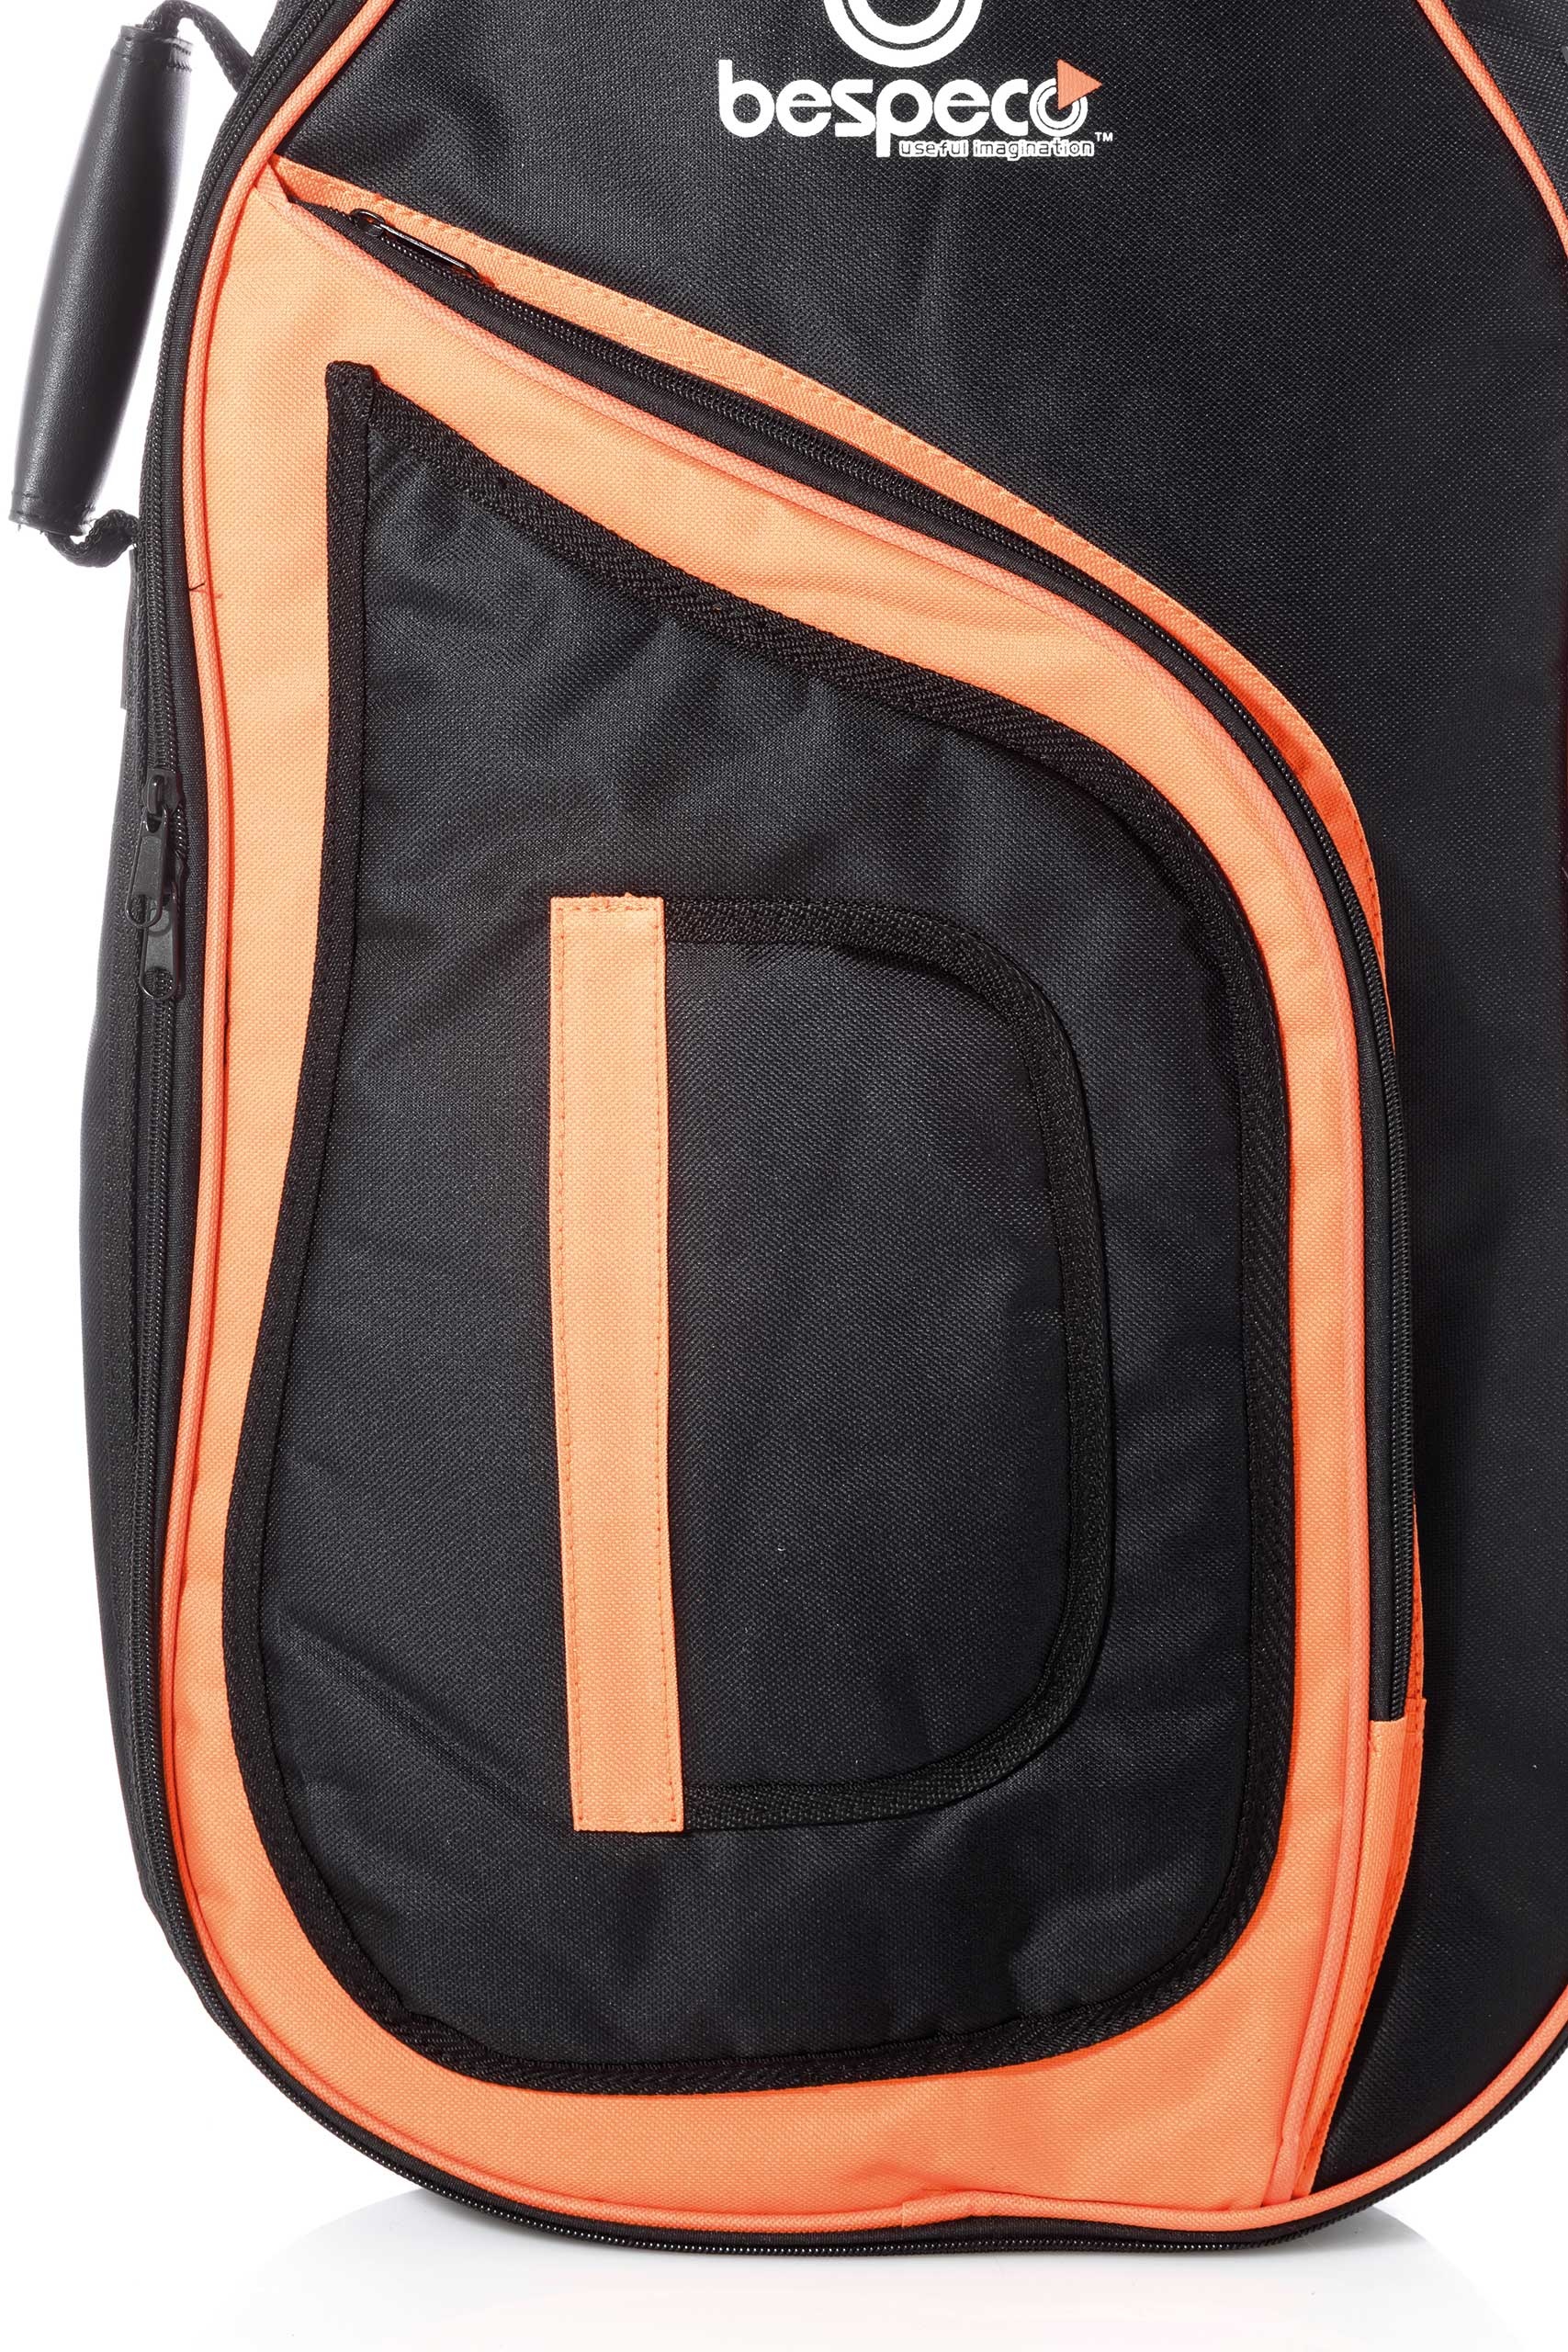 bag180bg-borsa-morbida-per-basso-rinforzata-nera-e-arancione